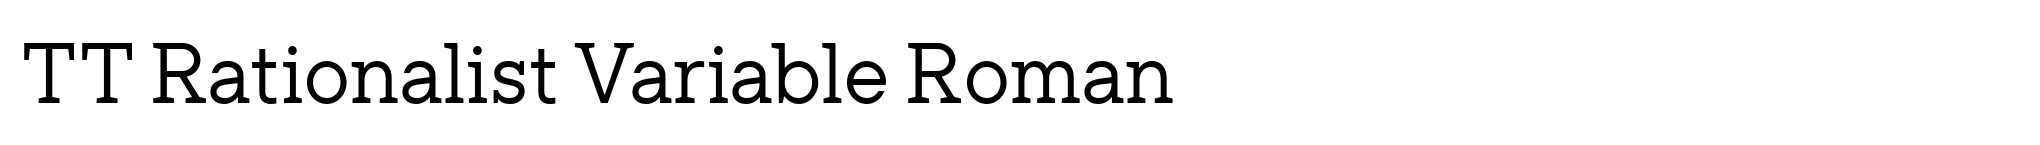 TT Rationalist Variable Roman image